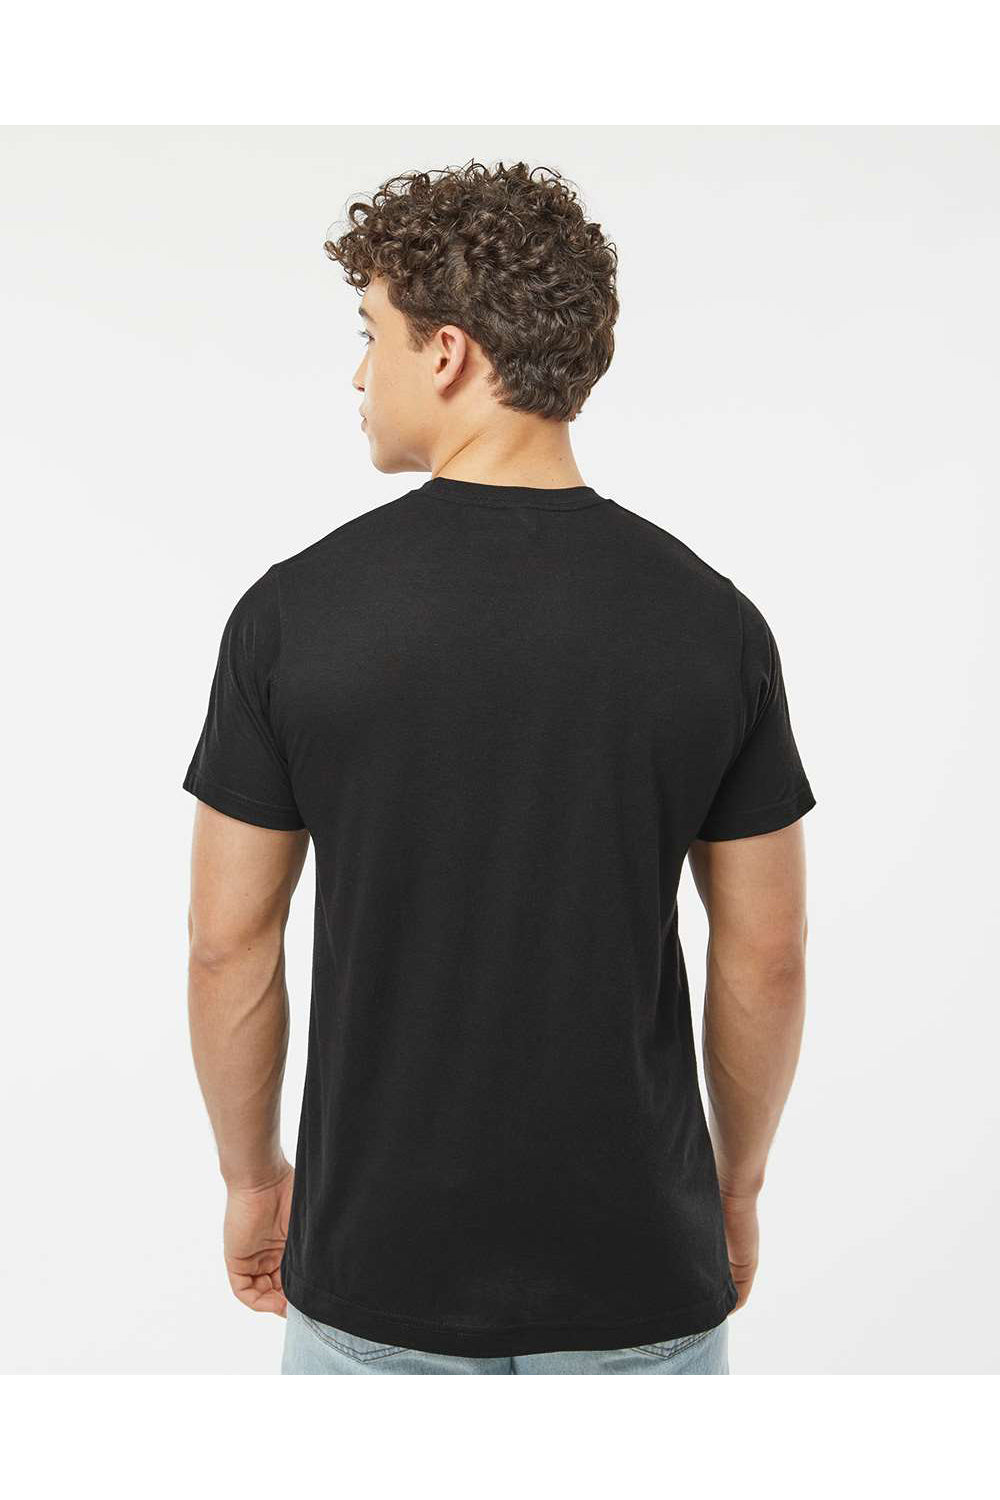 Tultex 241 Mens Poly-Rich Short Sleeve Crewneck T-Shirt Black Model Back